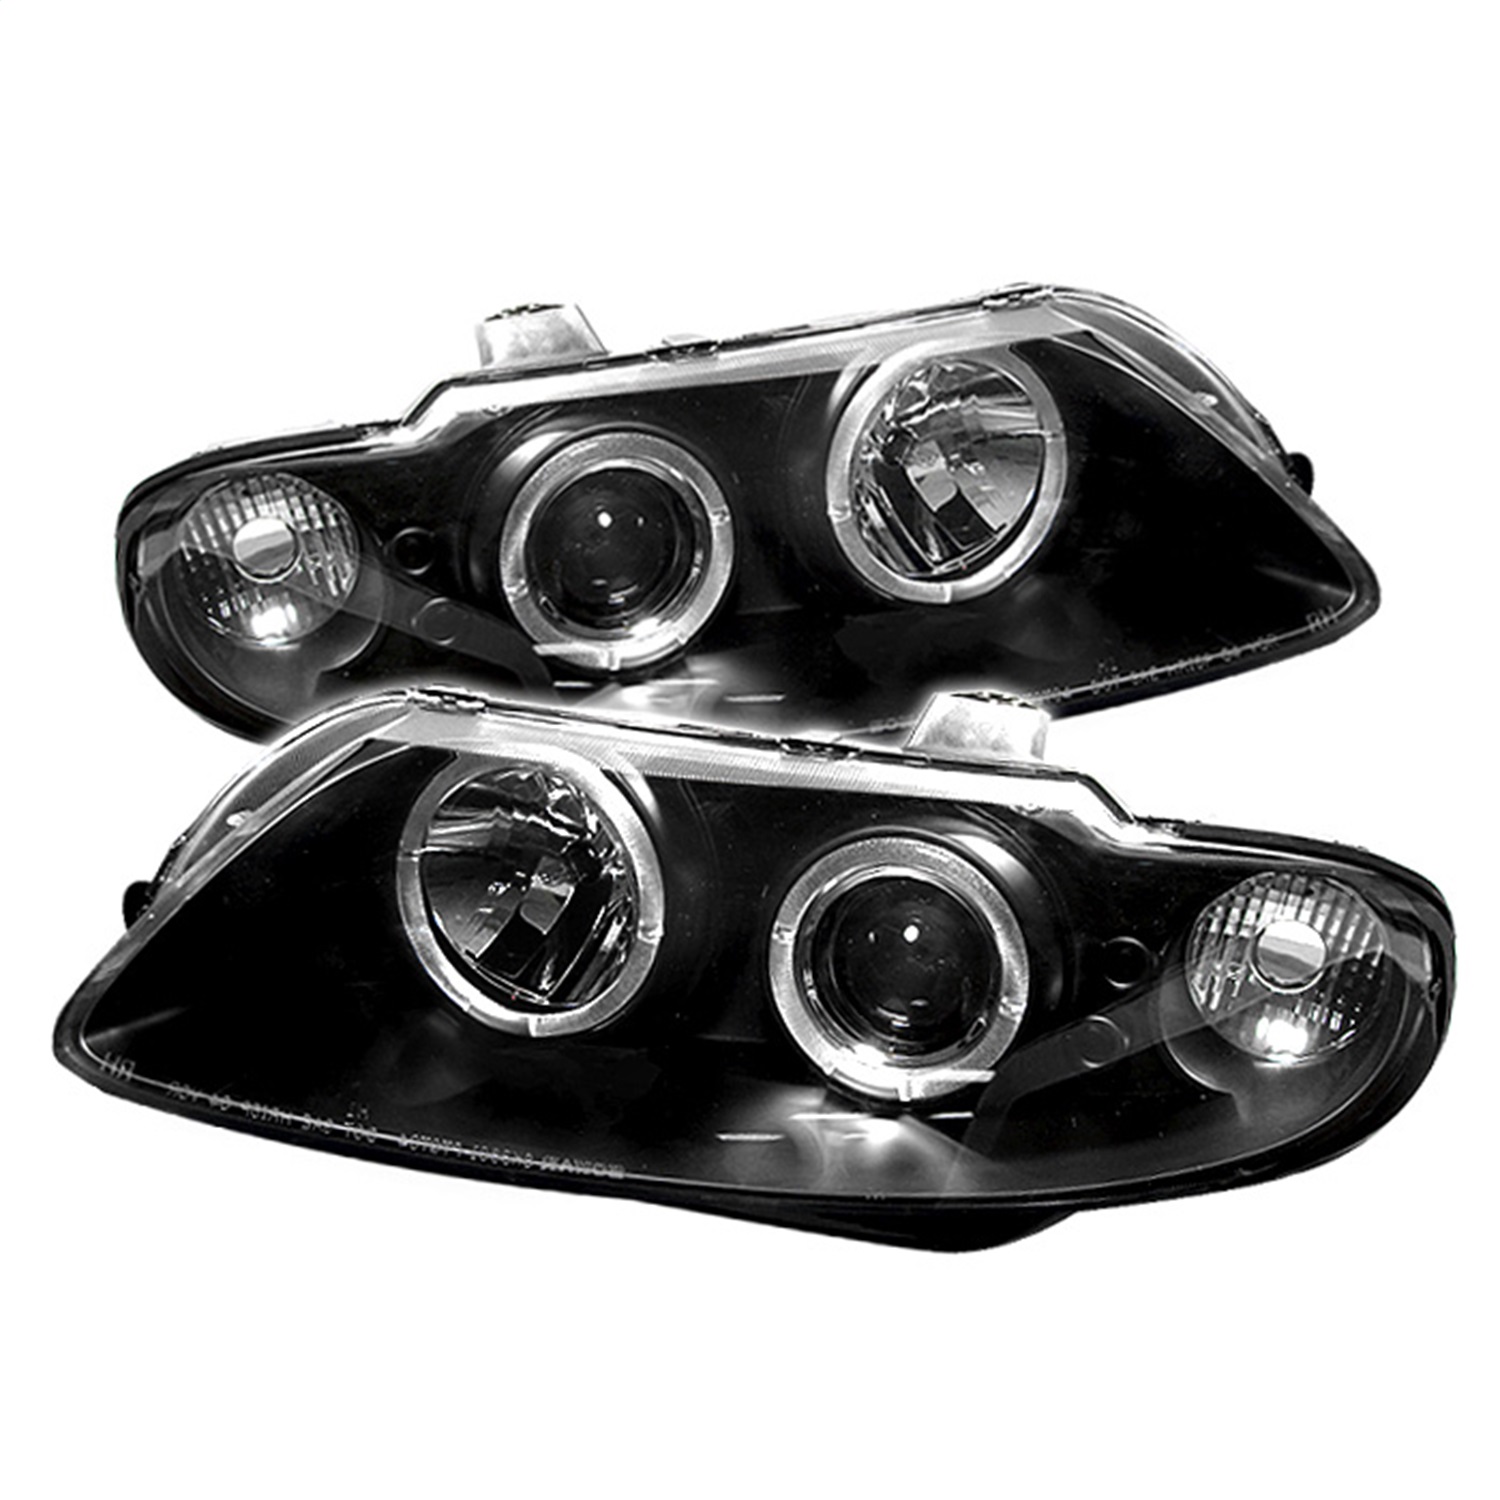 Spyder Auto 5011749 Halo LED Projector Headlights Fits 04-06 GTO